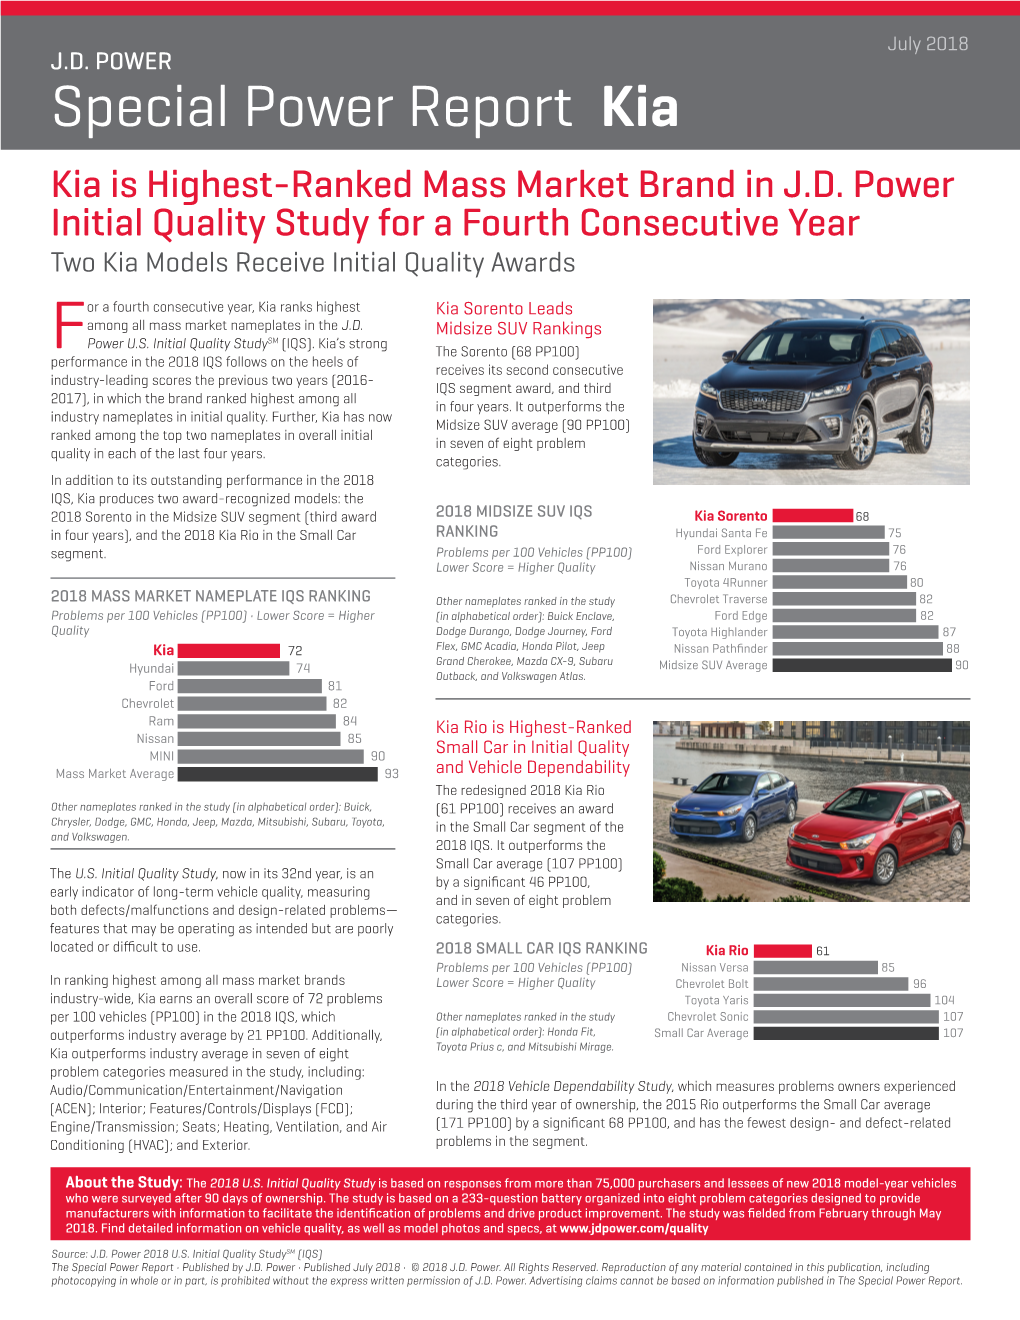 Special Power Report Kia Kia Is Highest-Ranked Mass Market Brand in J.D